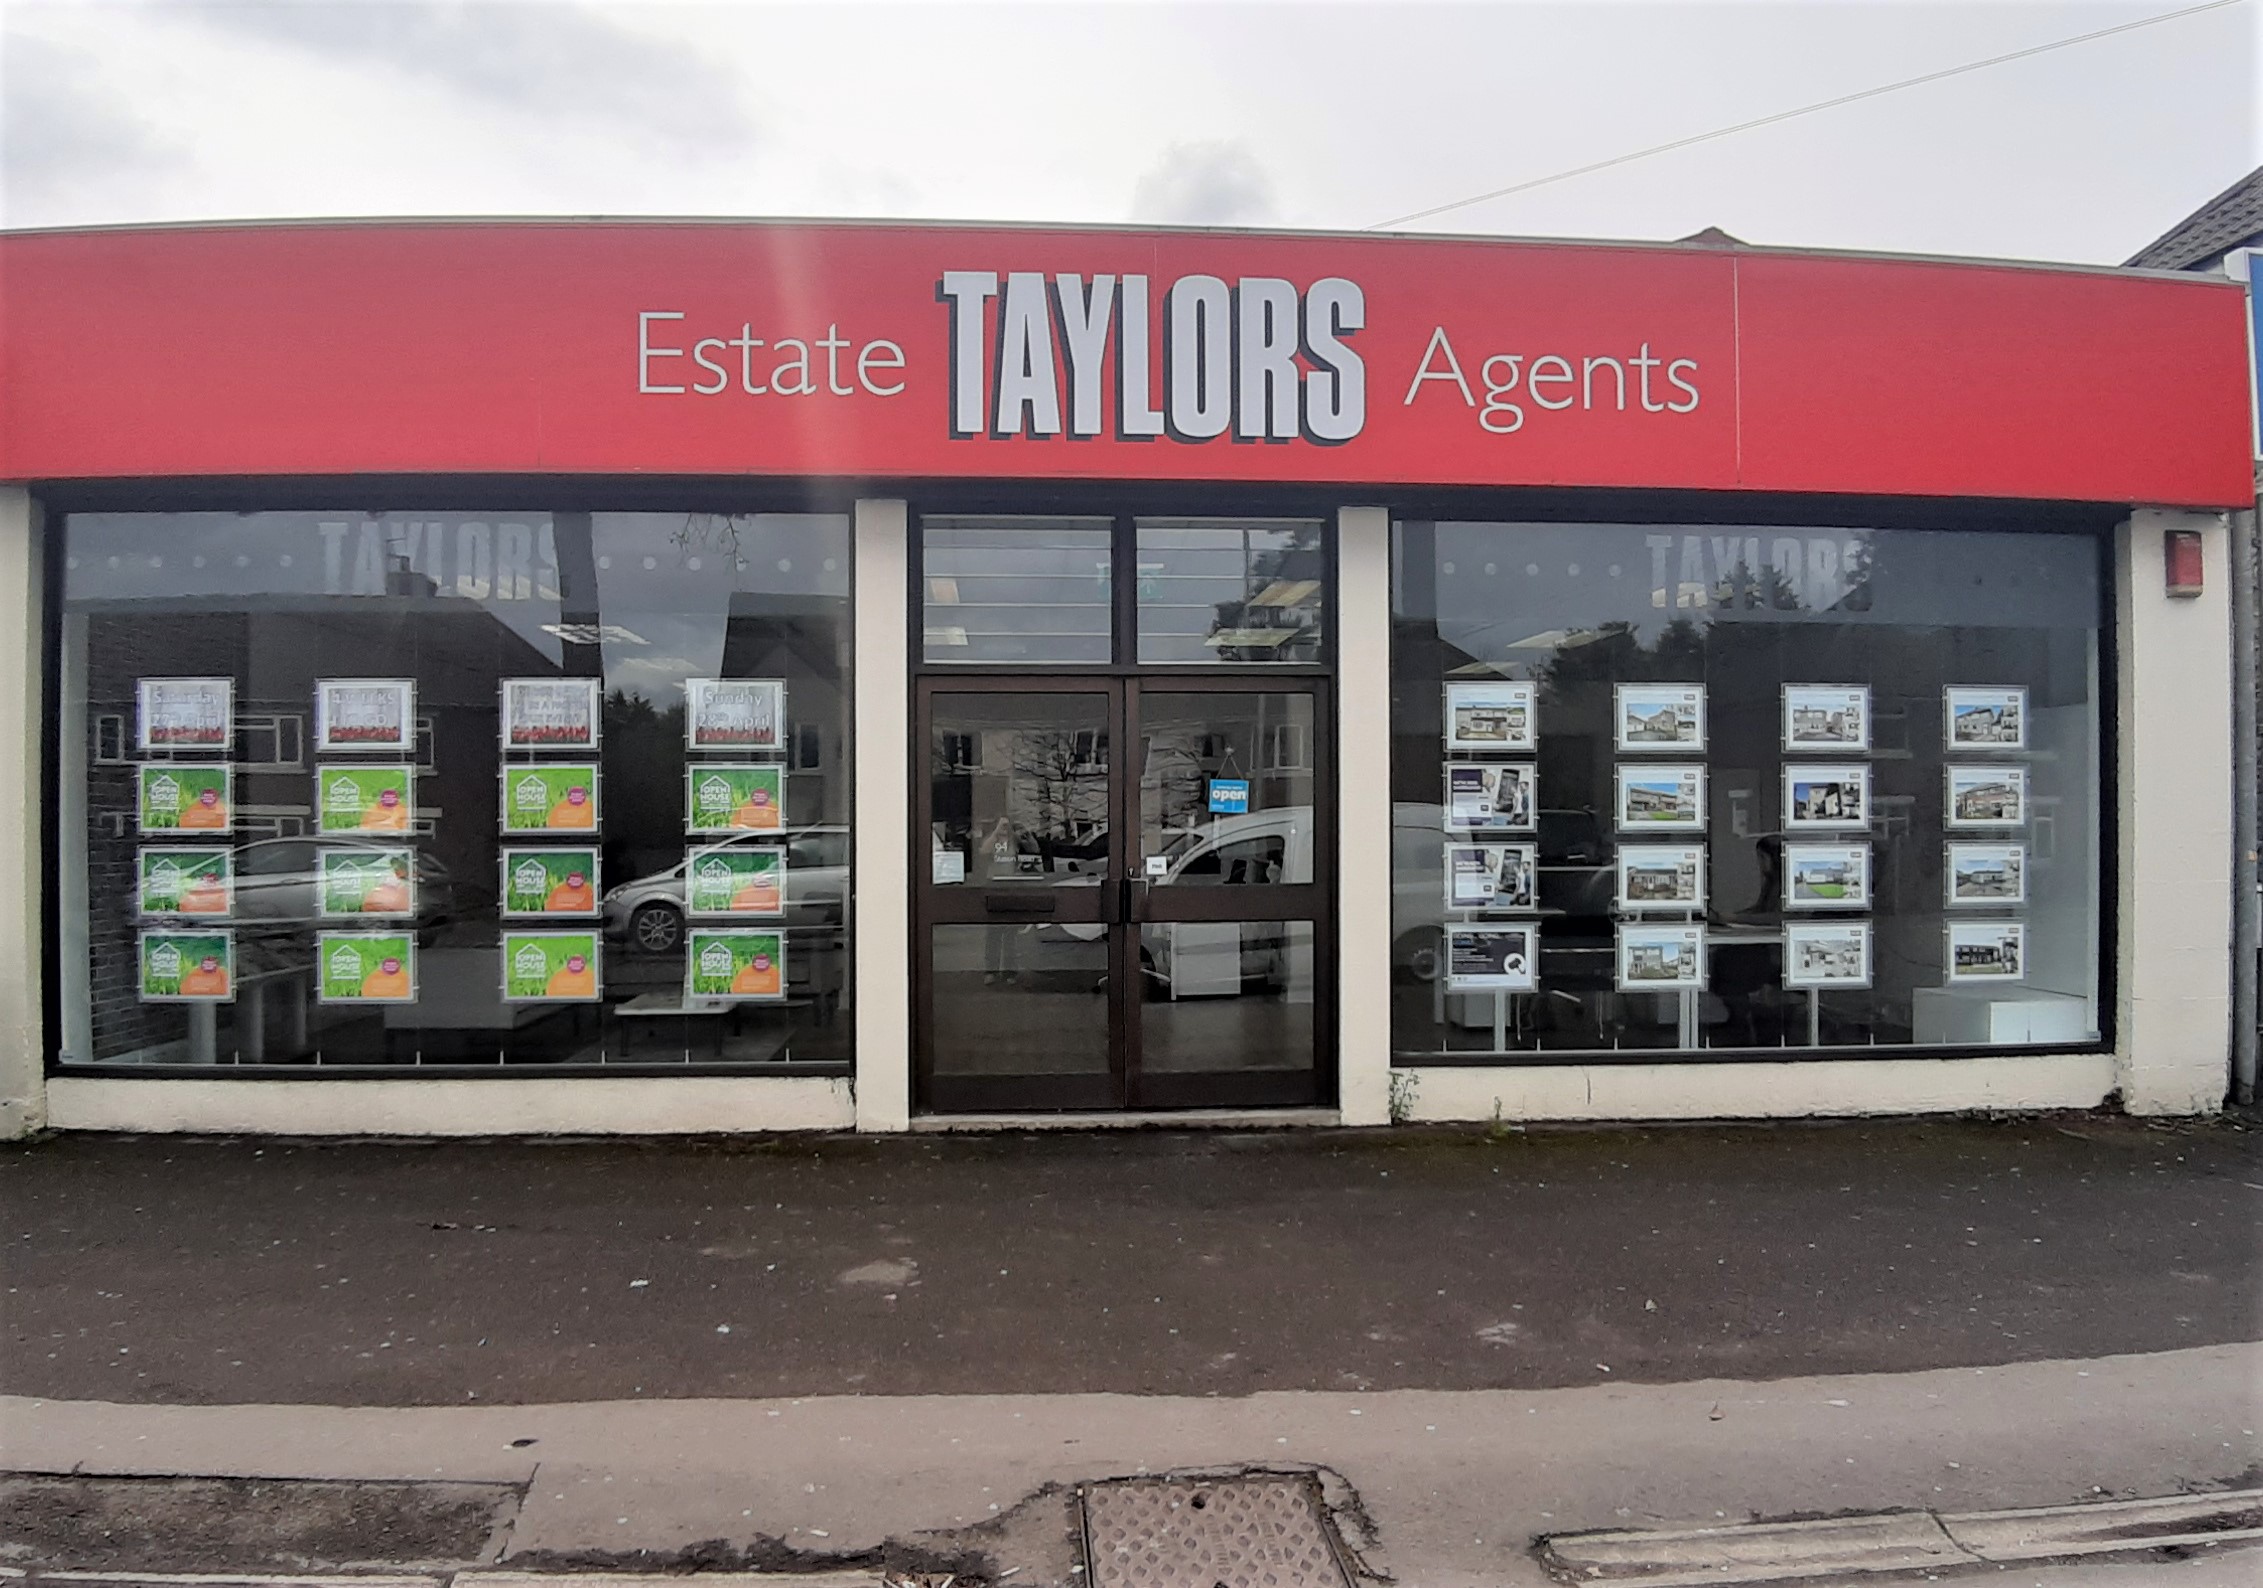 Taylors Estate Agent Yate Bristol 01454 740197